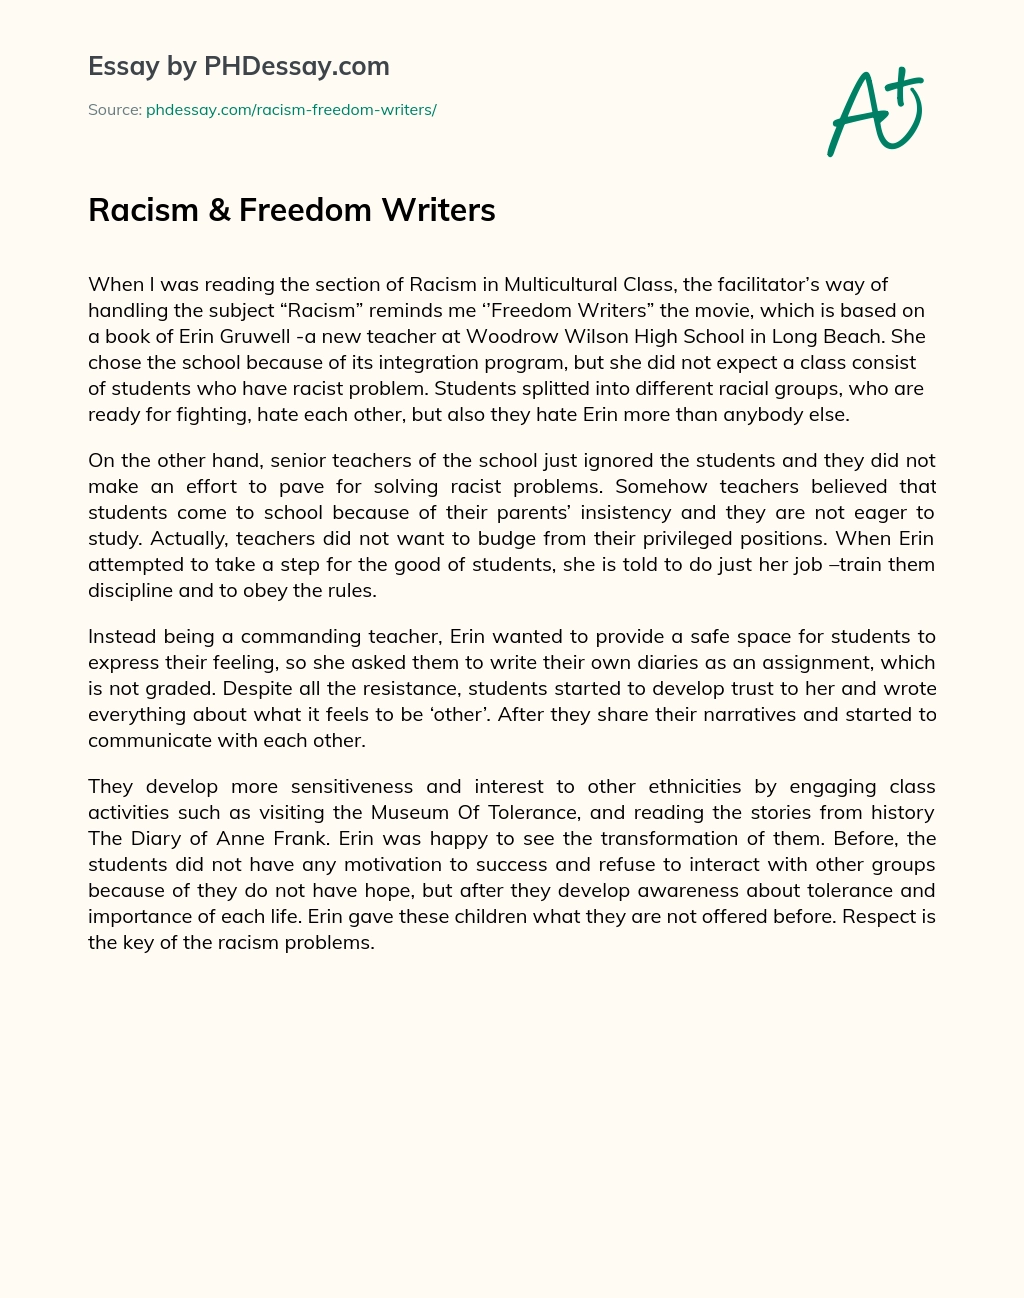 Racism & Freedom Writers essay